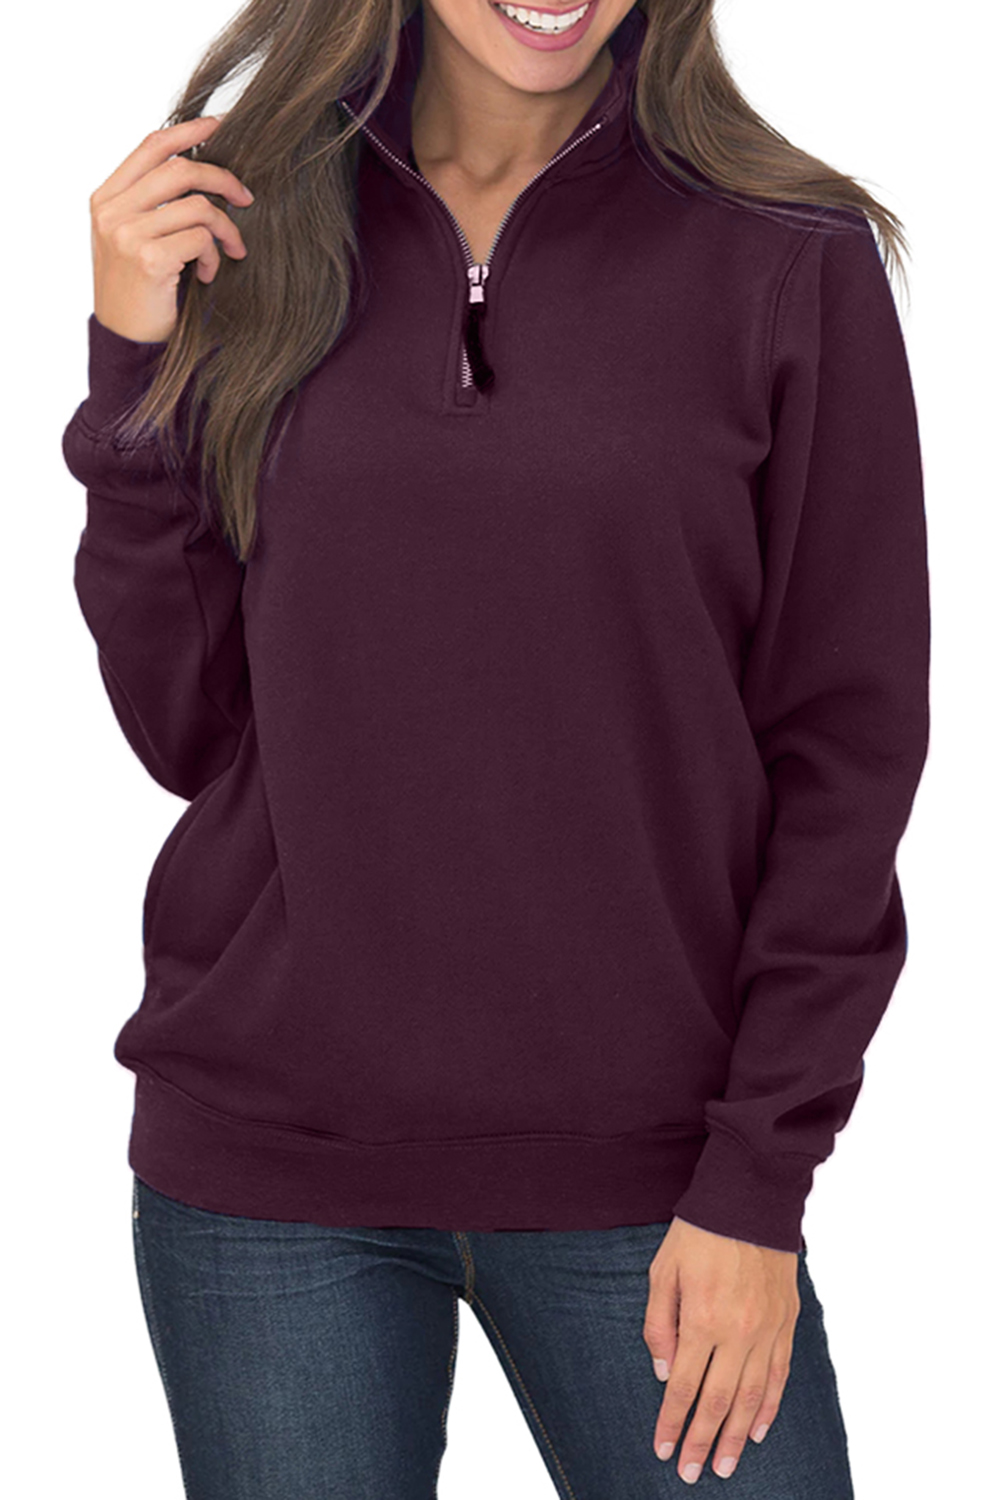 Burgundy Pocket Style Quarter Zip Sweatshirt - (US 4-6)S